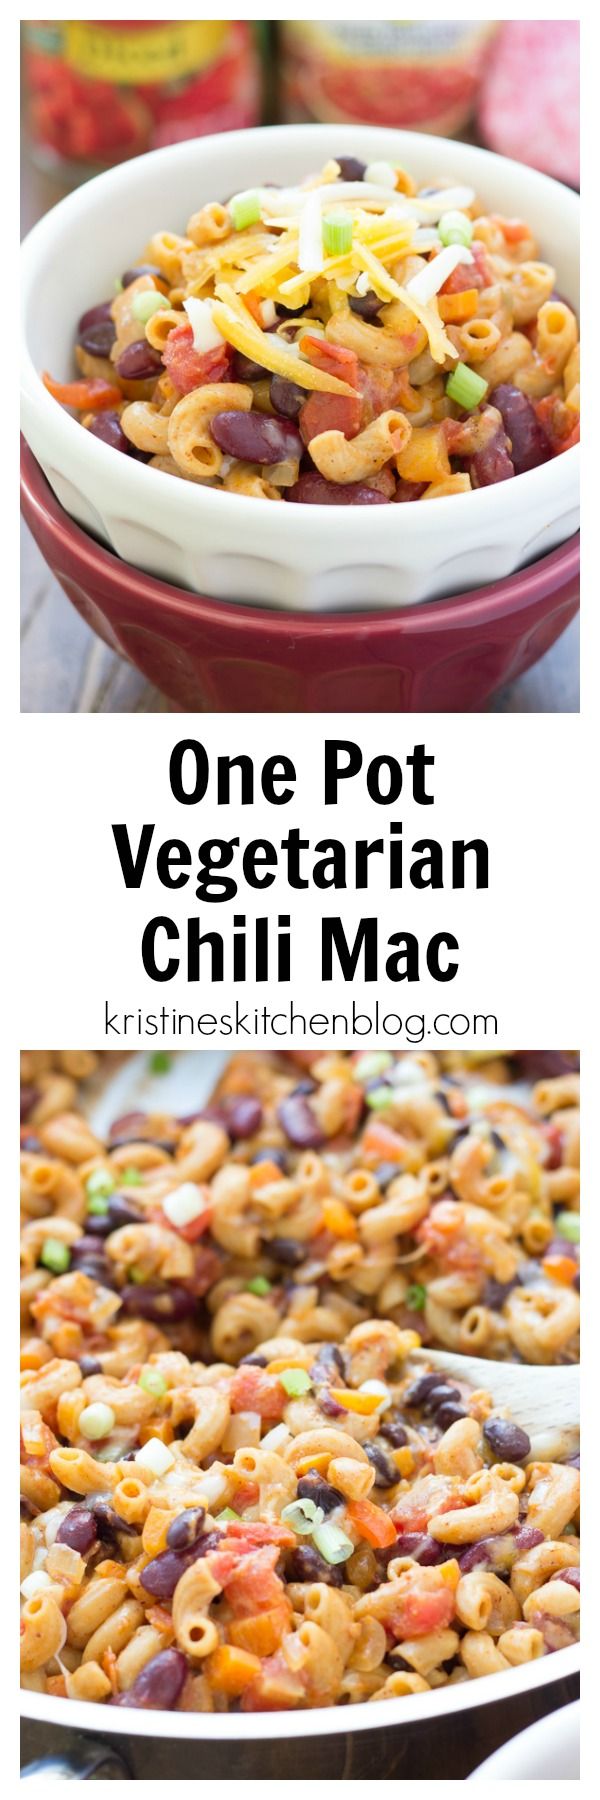 One Pot Vegetarian Chili Mac